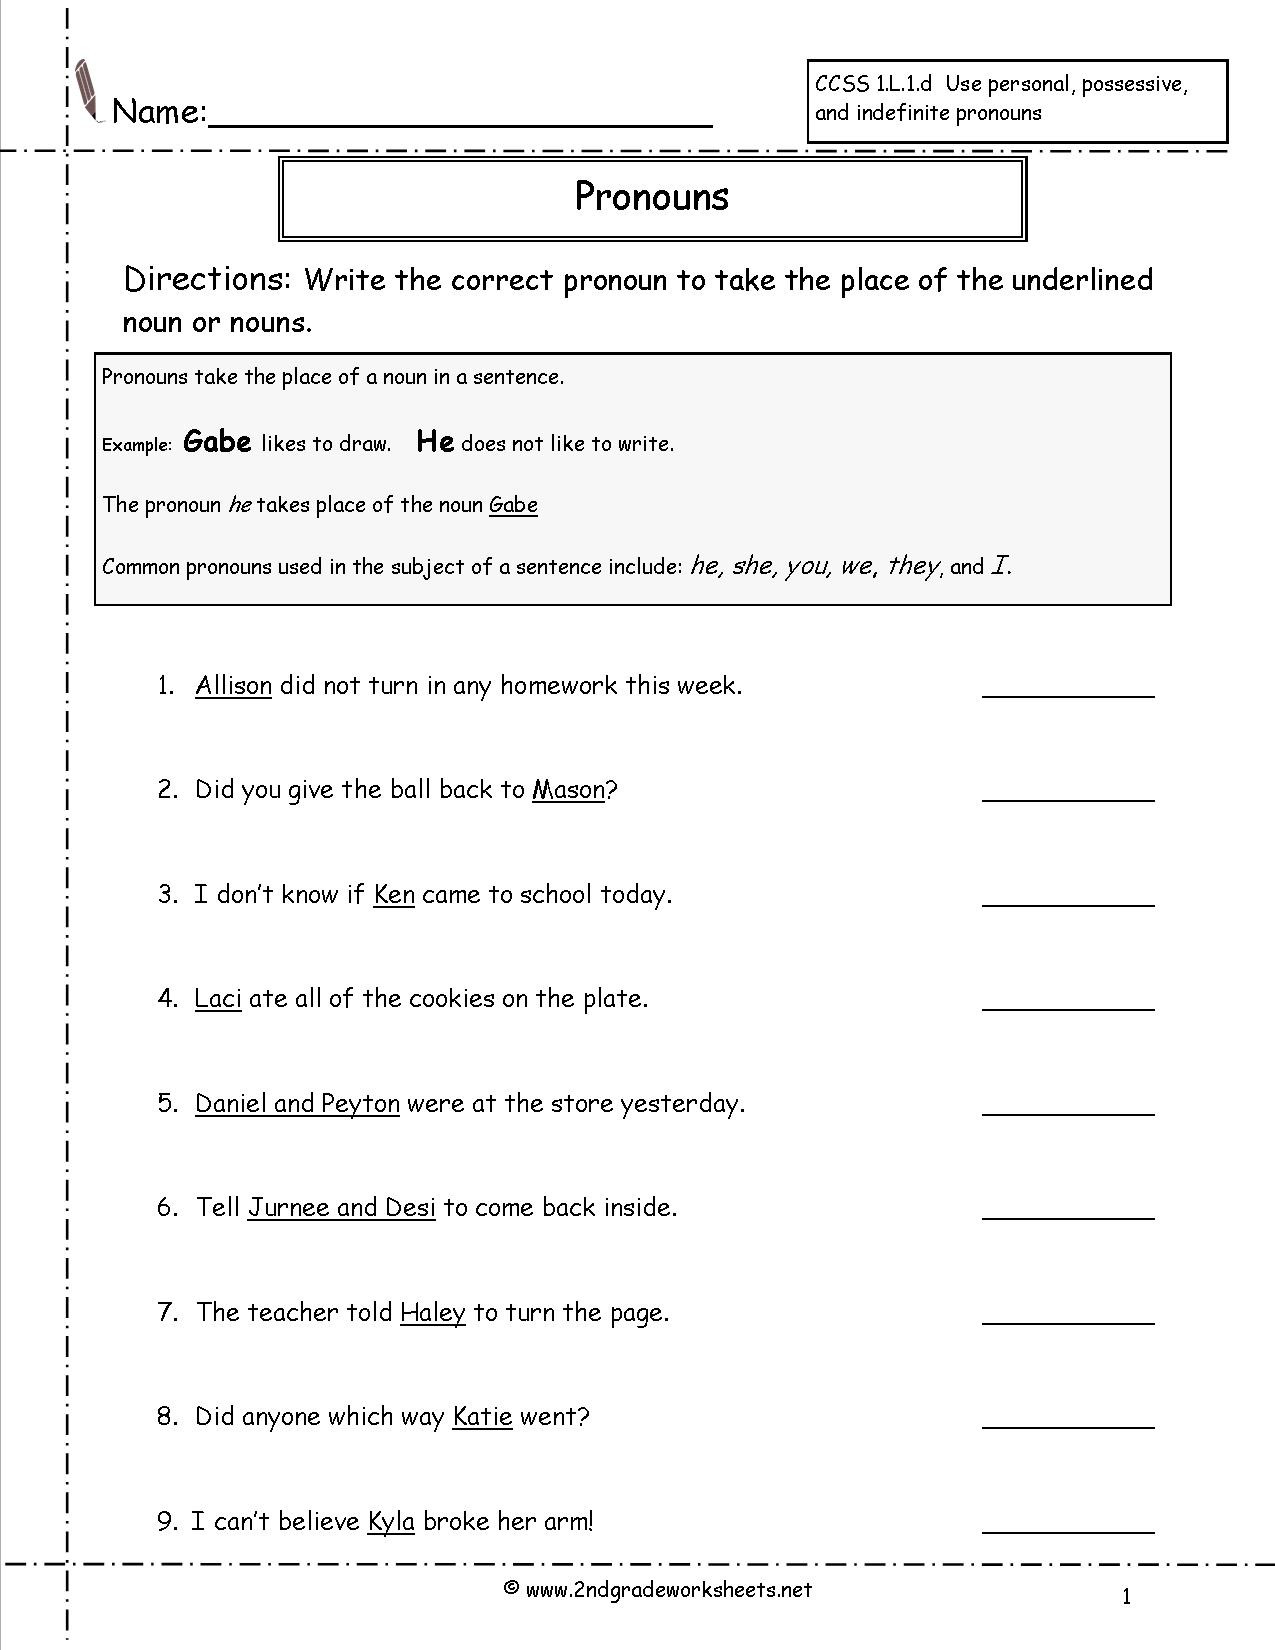 Pronouns Worksheet 2nd Grade Pronoun Worksheets 2nd Grade